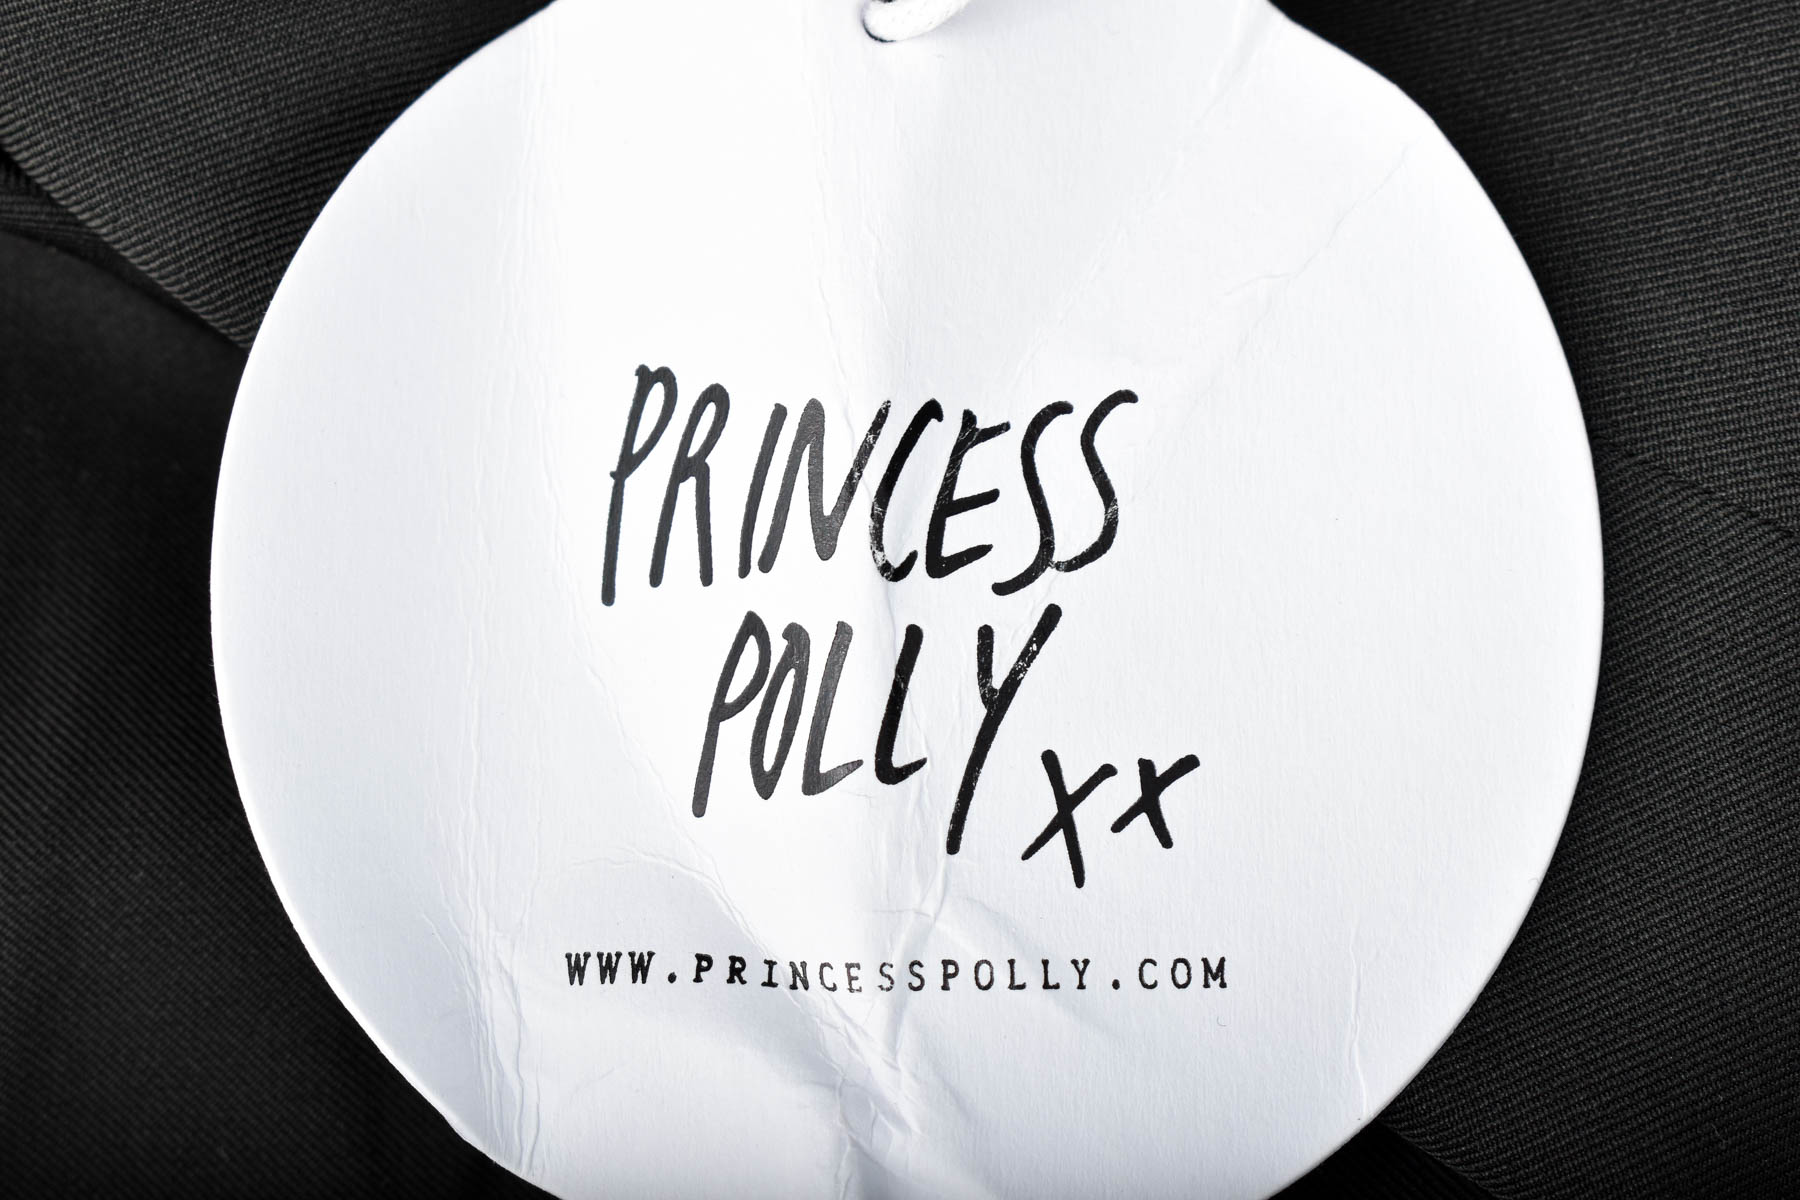 Cămașa de damă - Princess Polly - 2